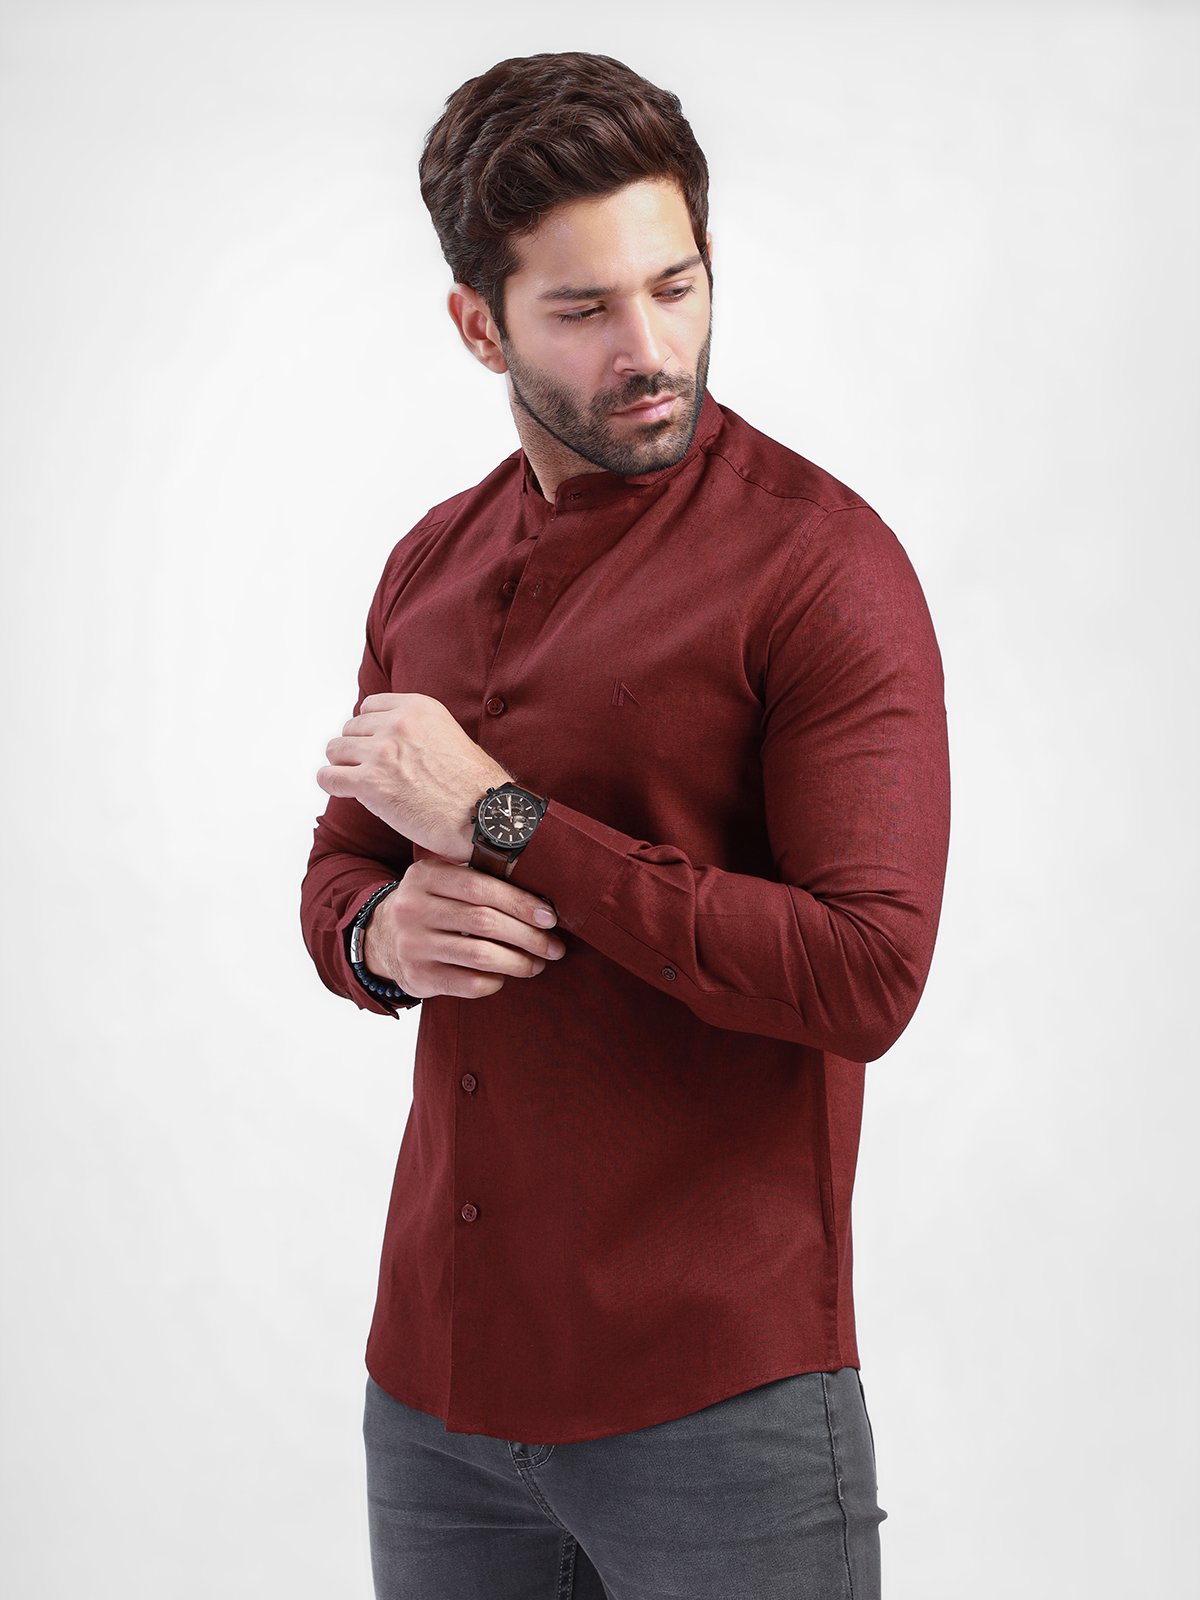 Men's Red Casual Shirt - FMTS21-31457